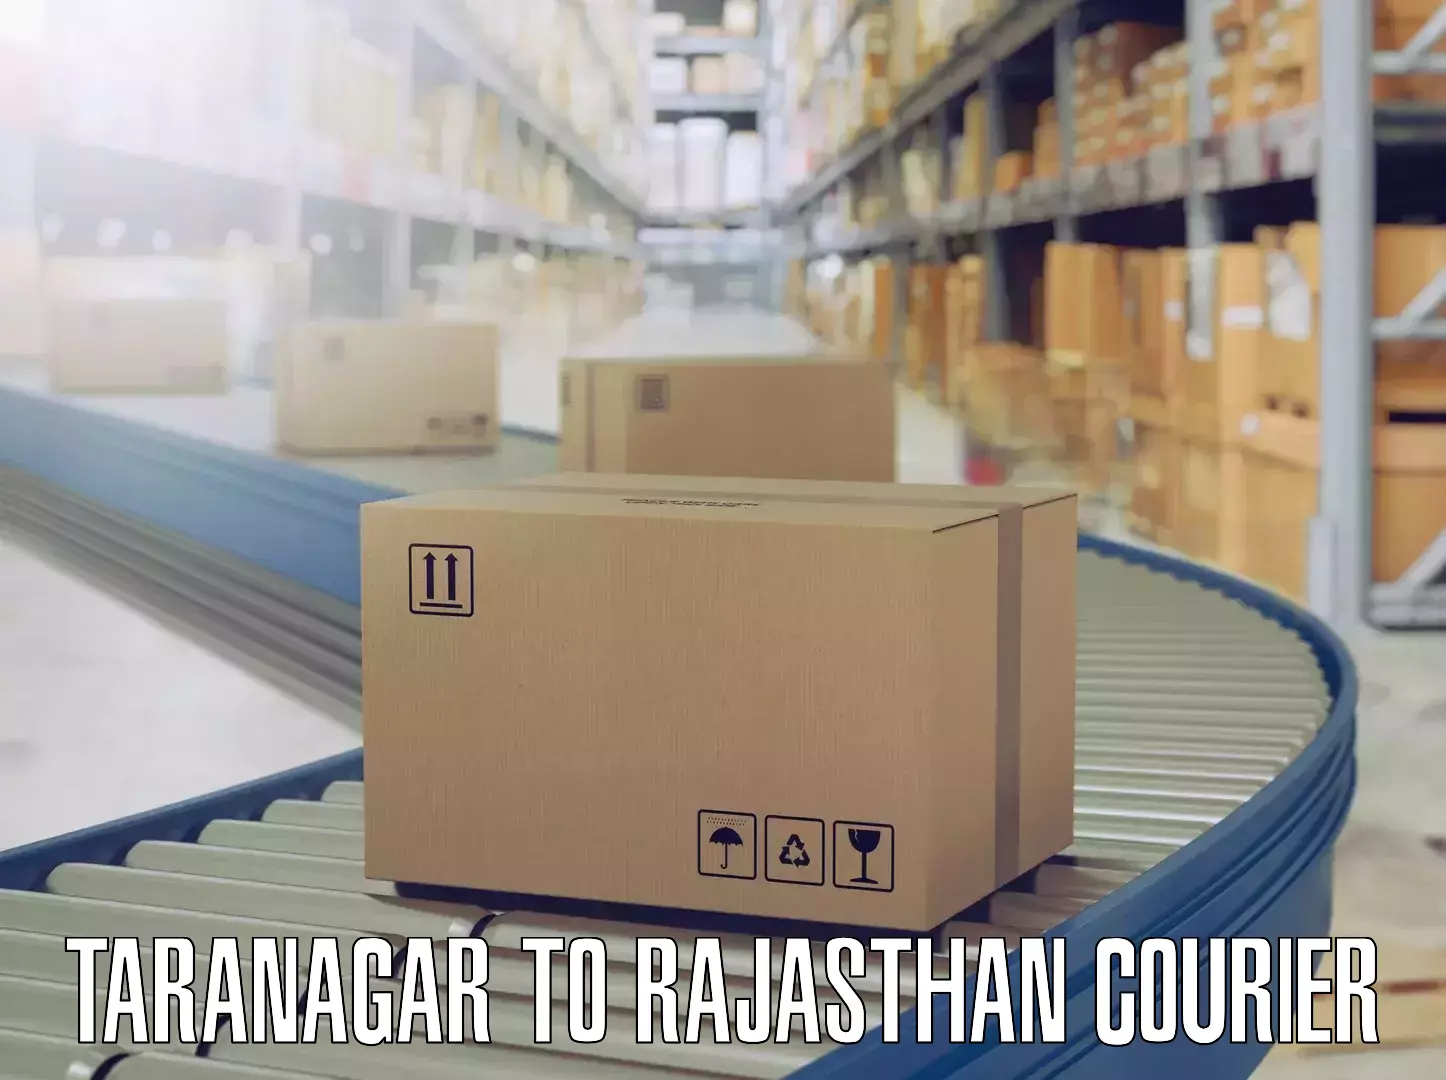 Professional moving company Taranagar to Banar